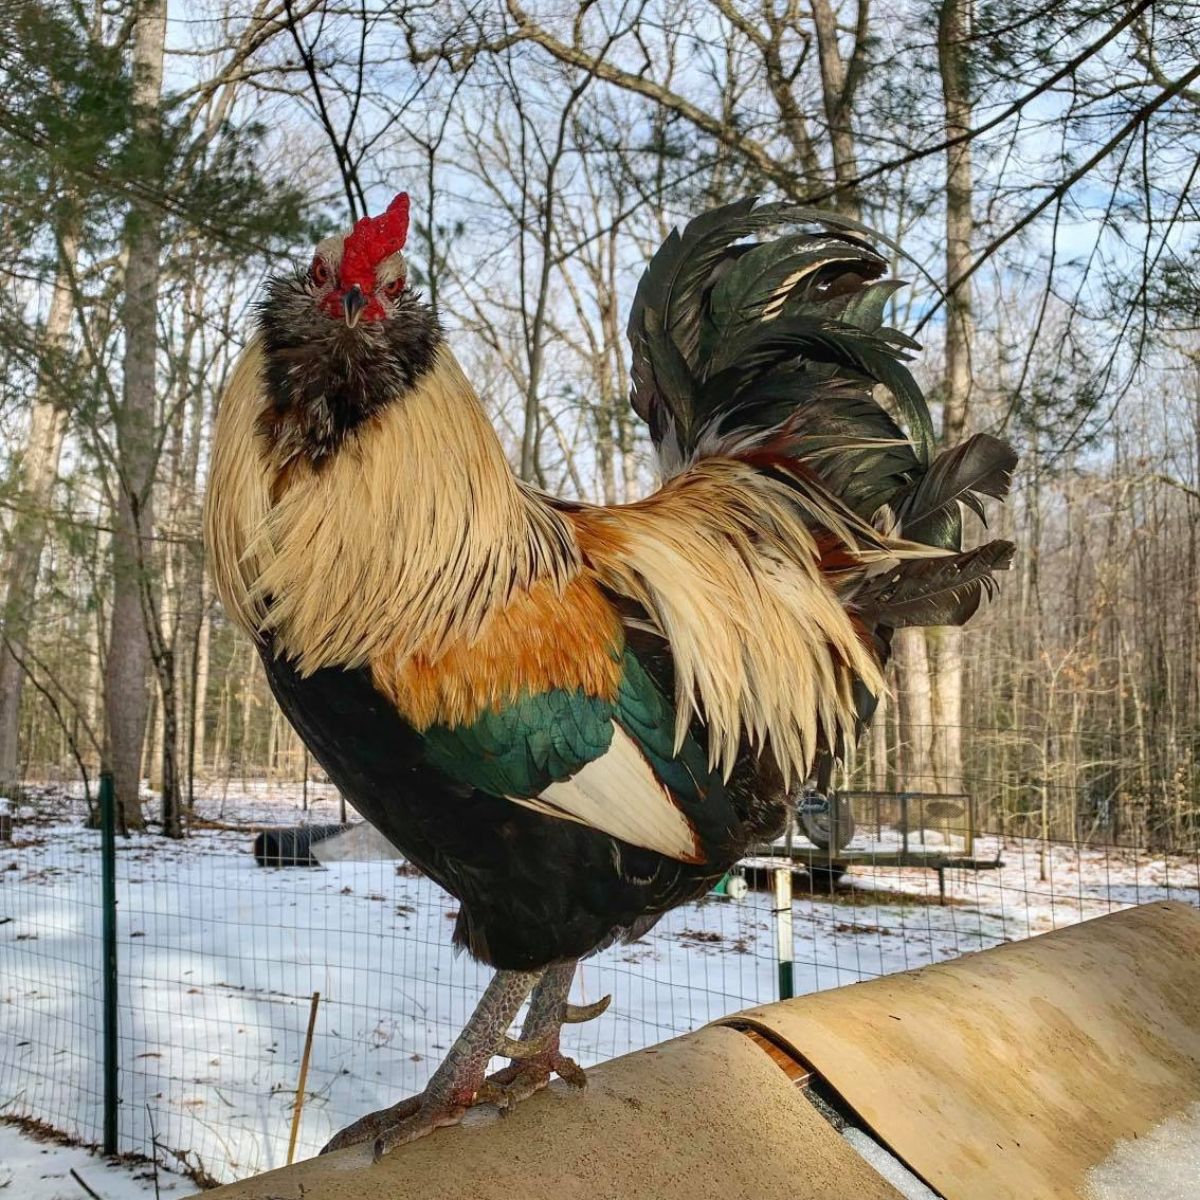 Colorful olive egger rooster.